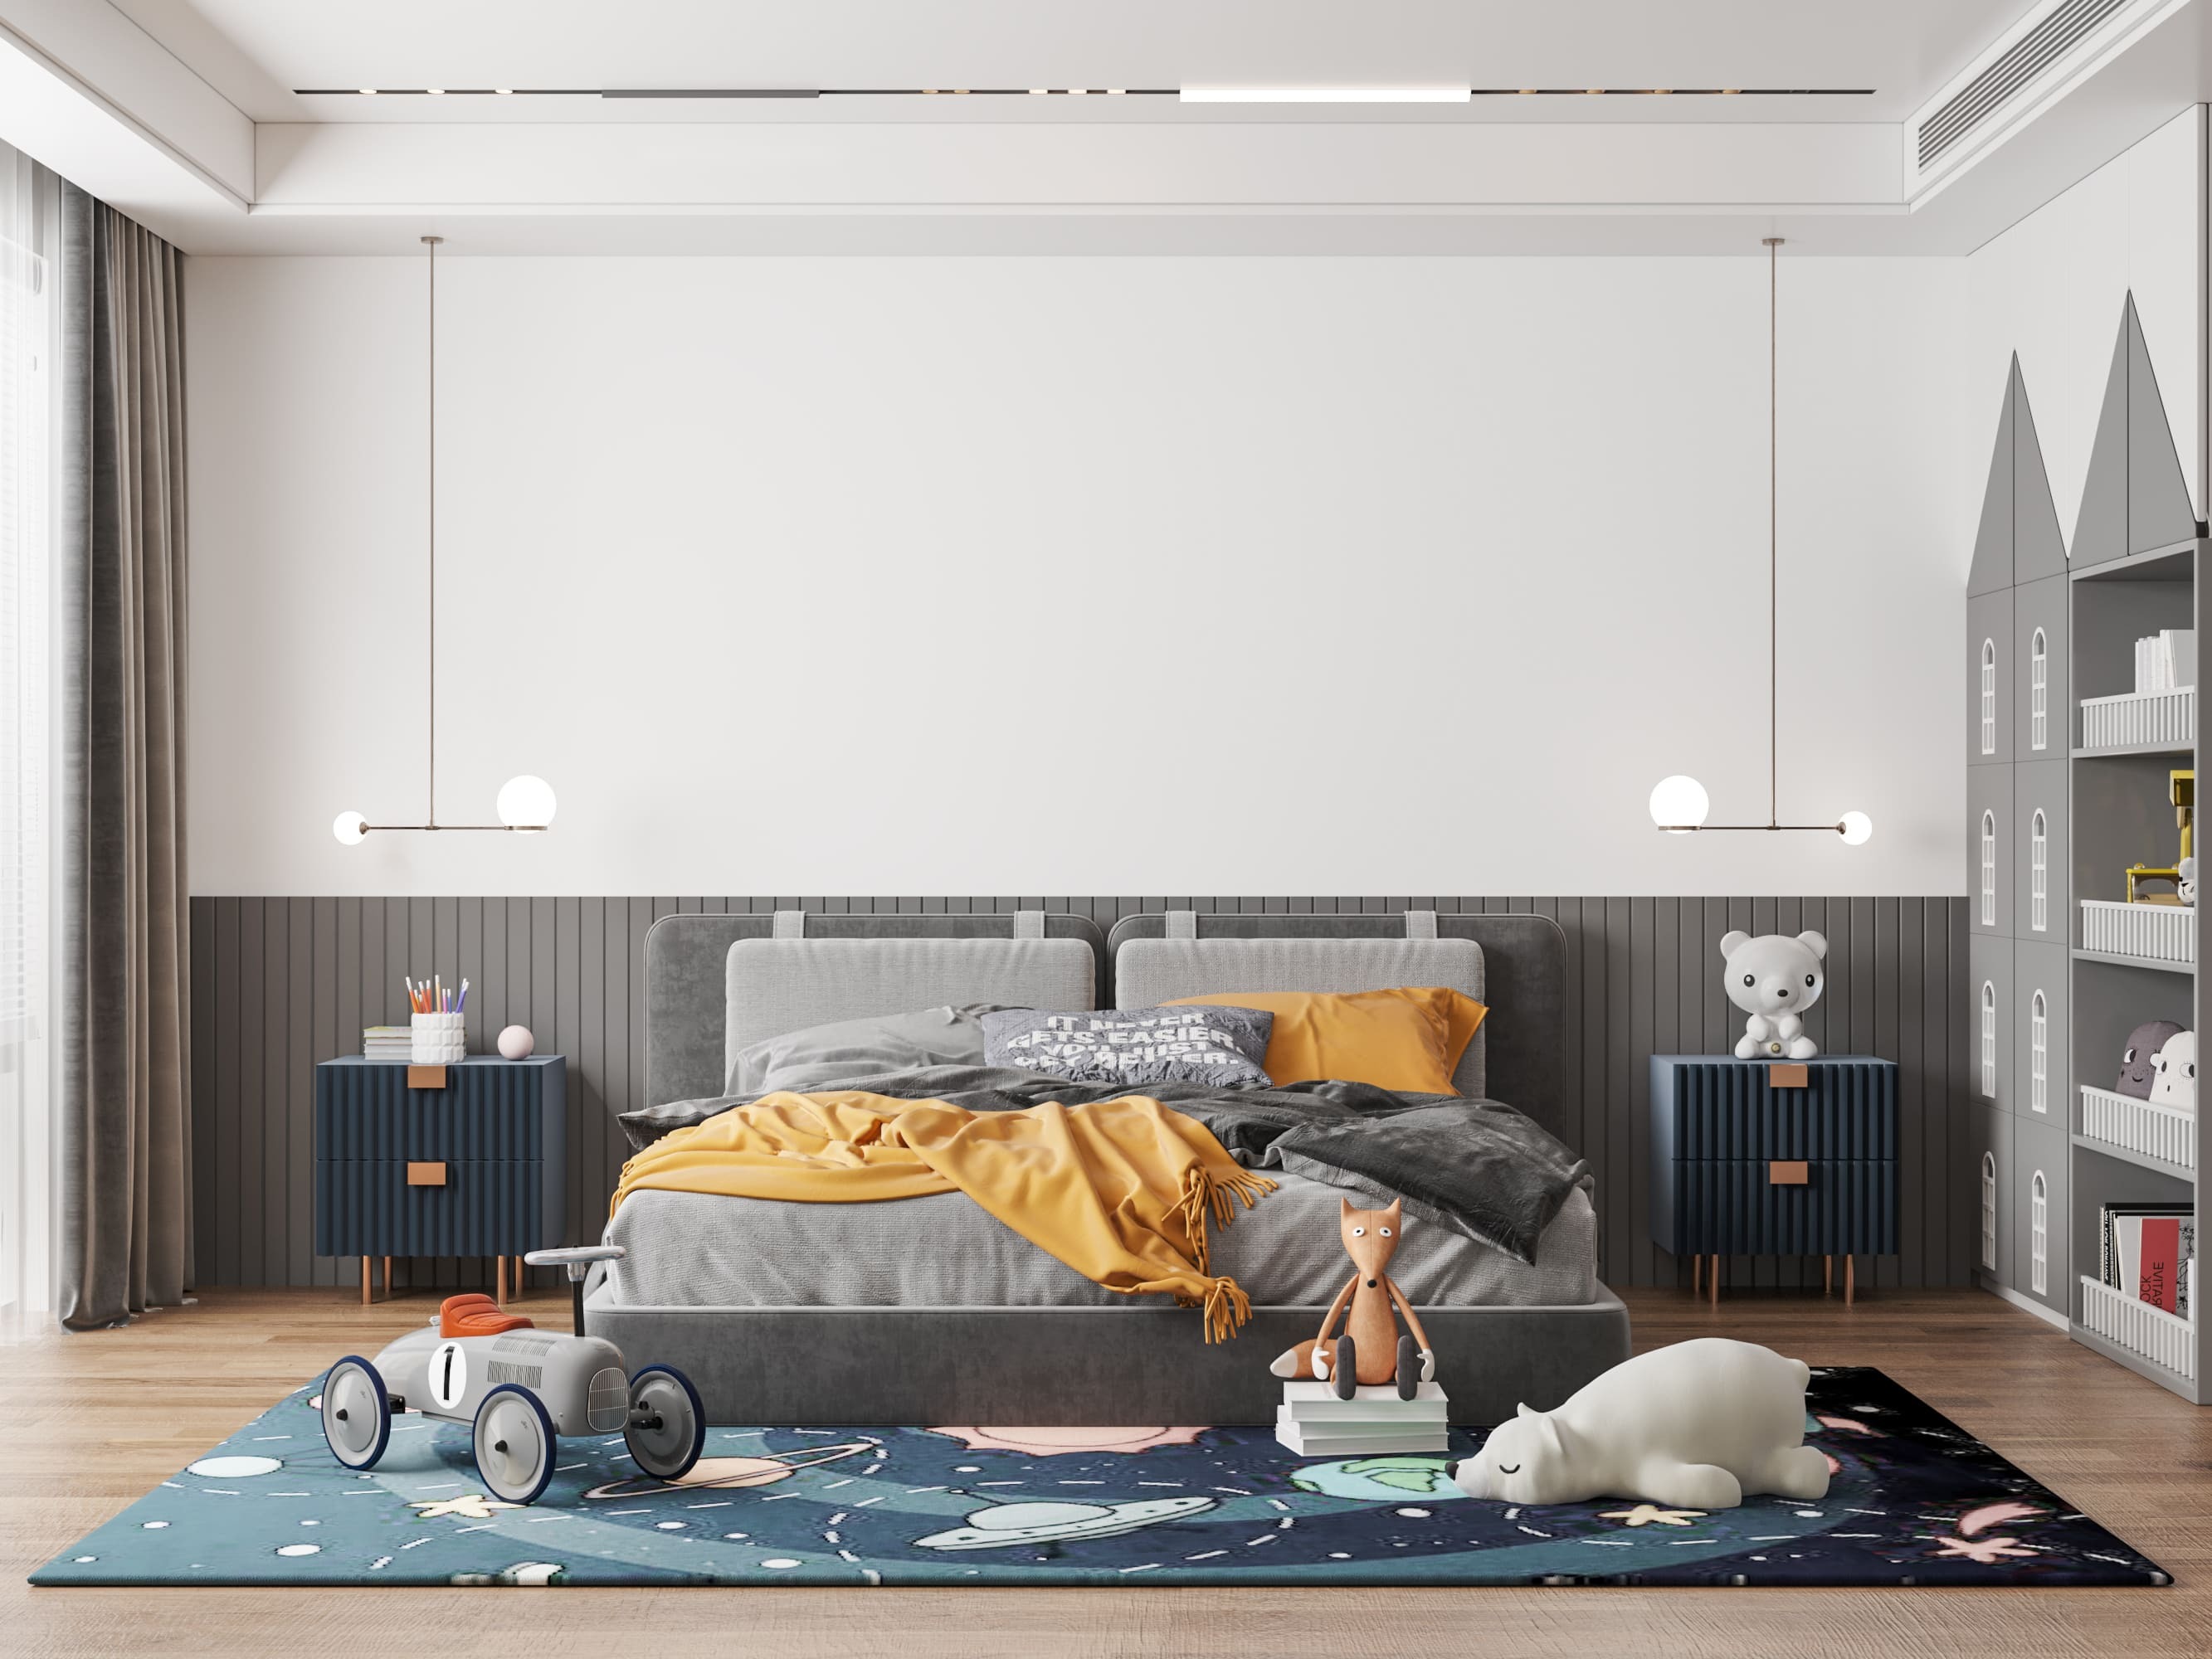 Interior Designs for Kids Bedrooms